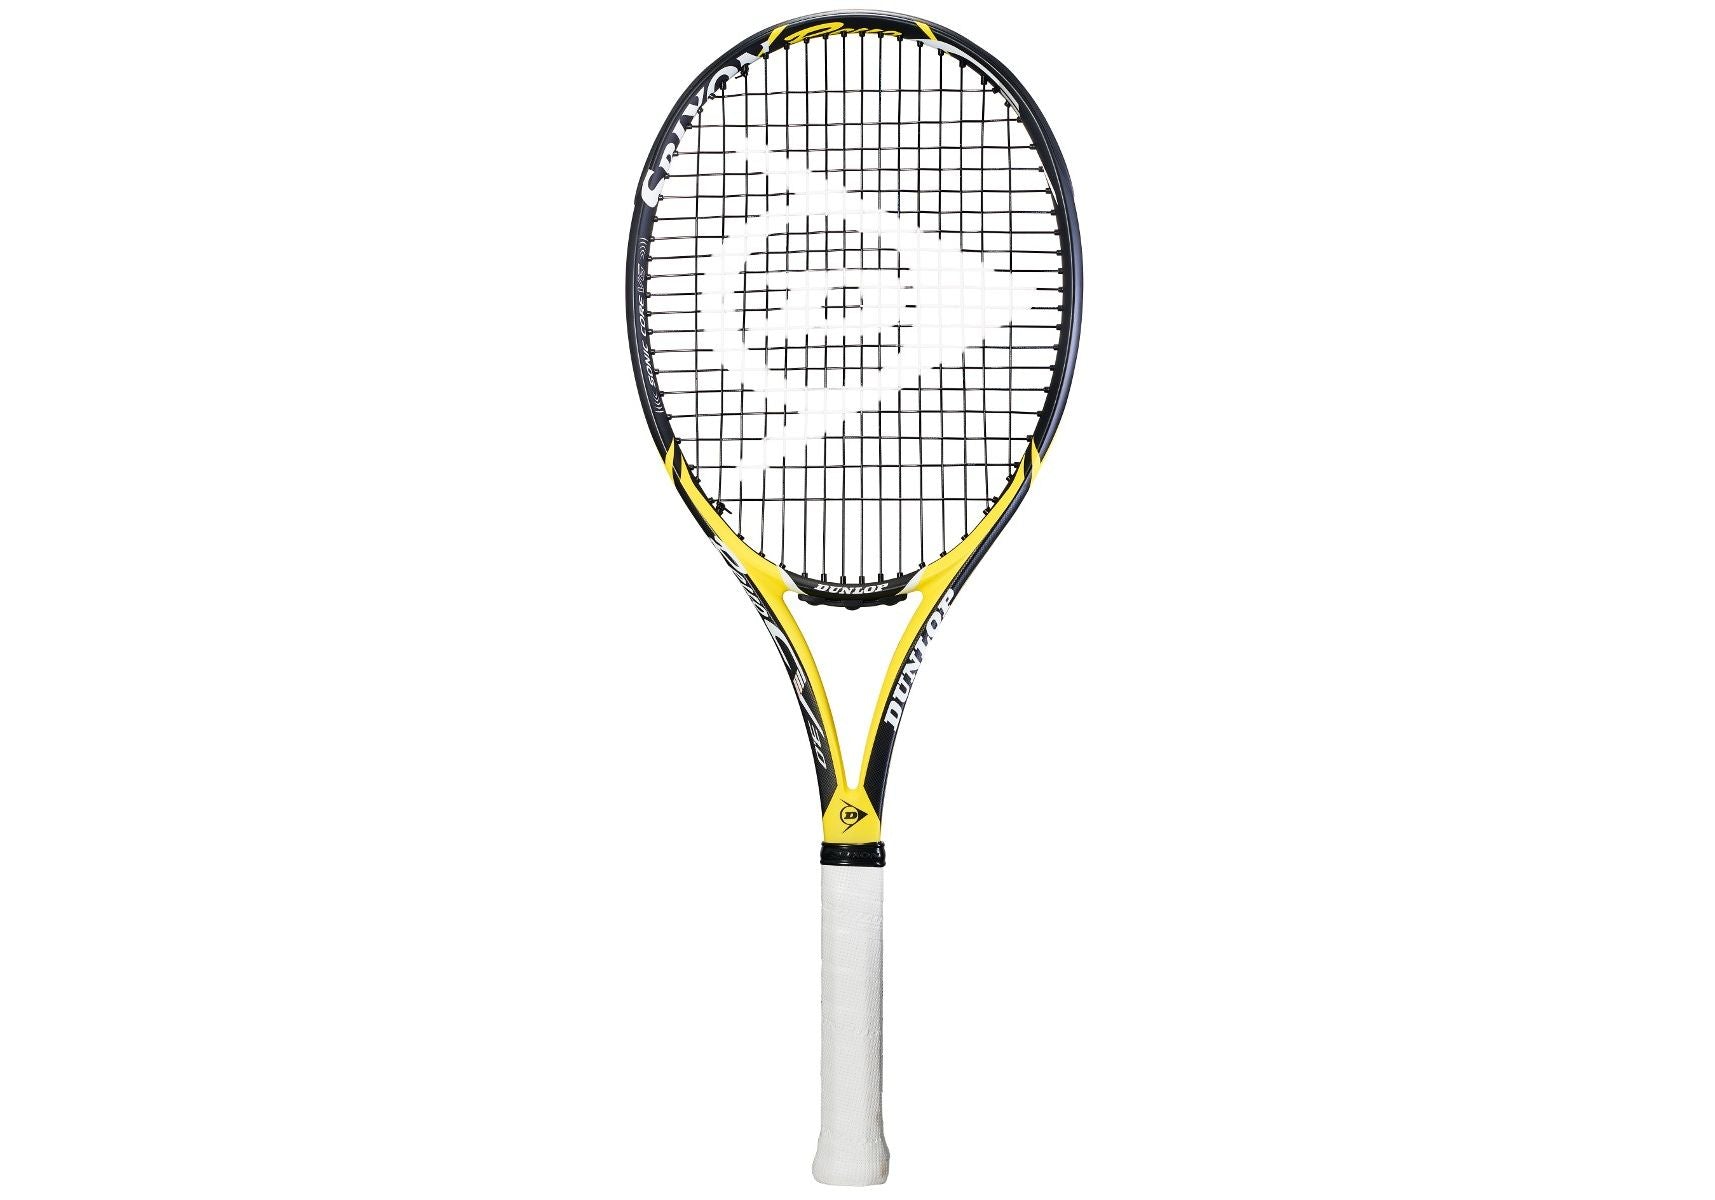 18Revo CV3.0 Tennis Racket